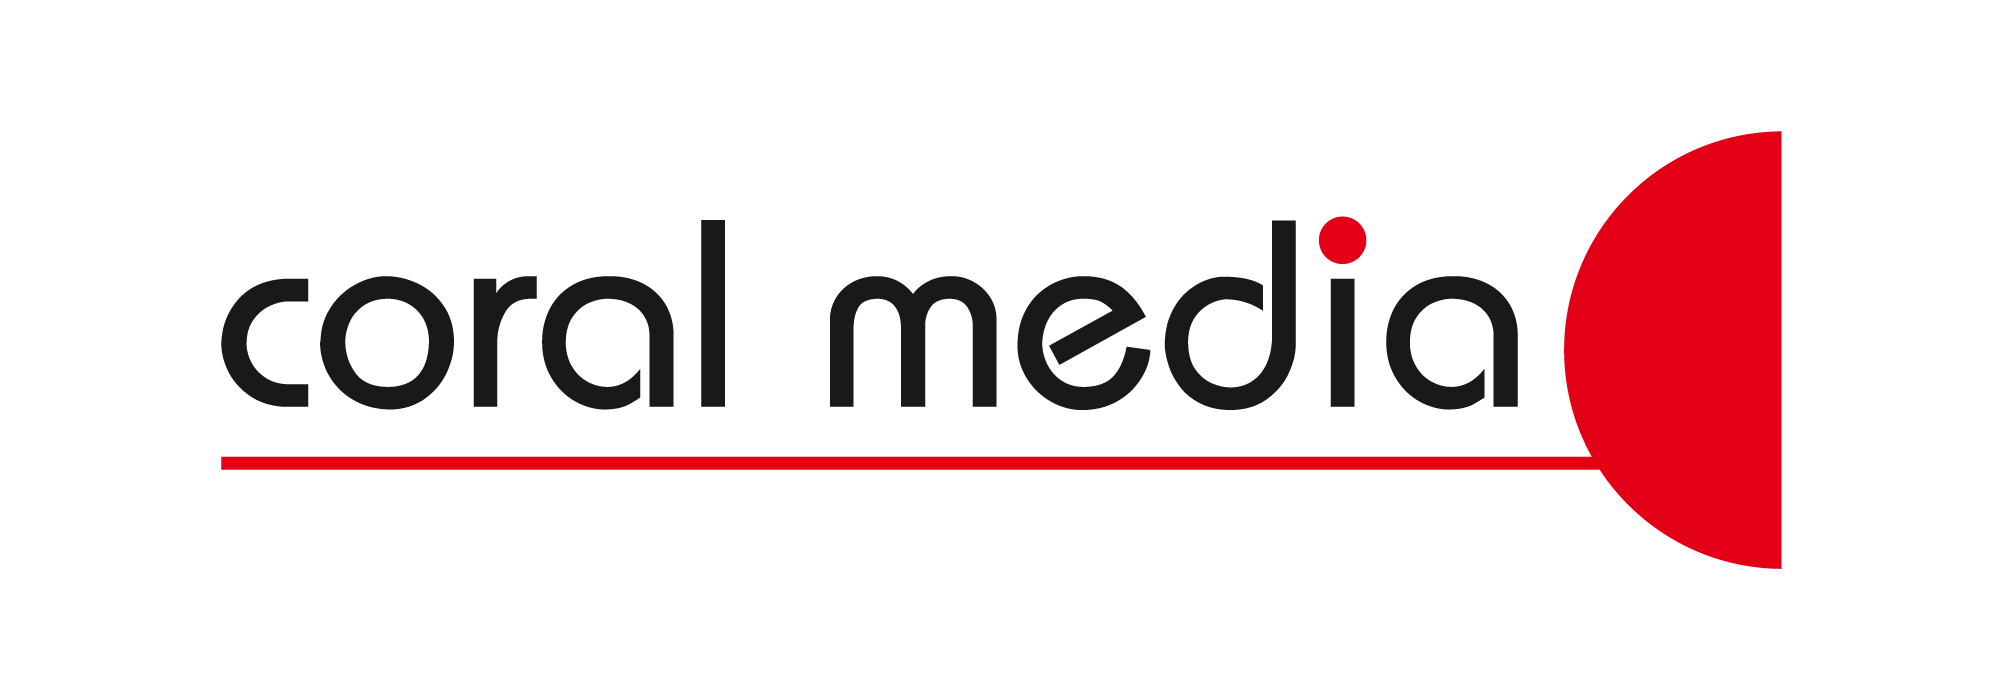 coral media - logo - png